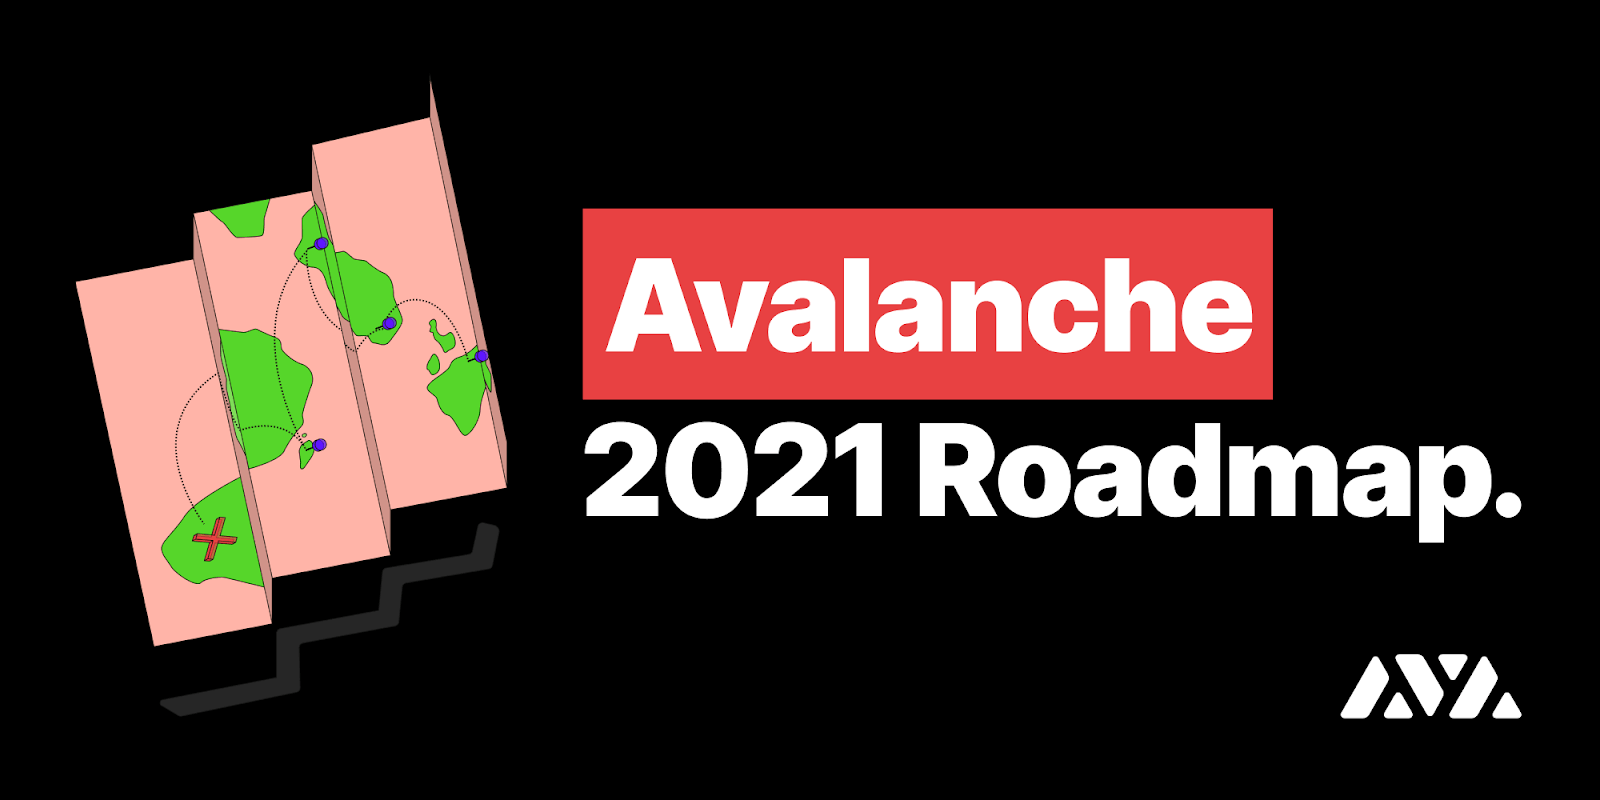 Avalanche’s New 2021 Roadmap